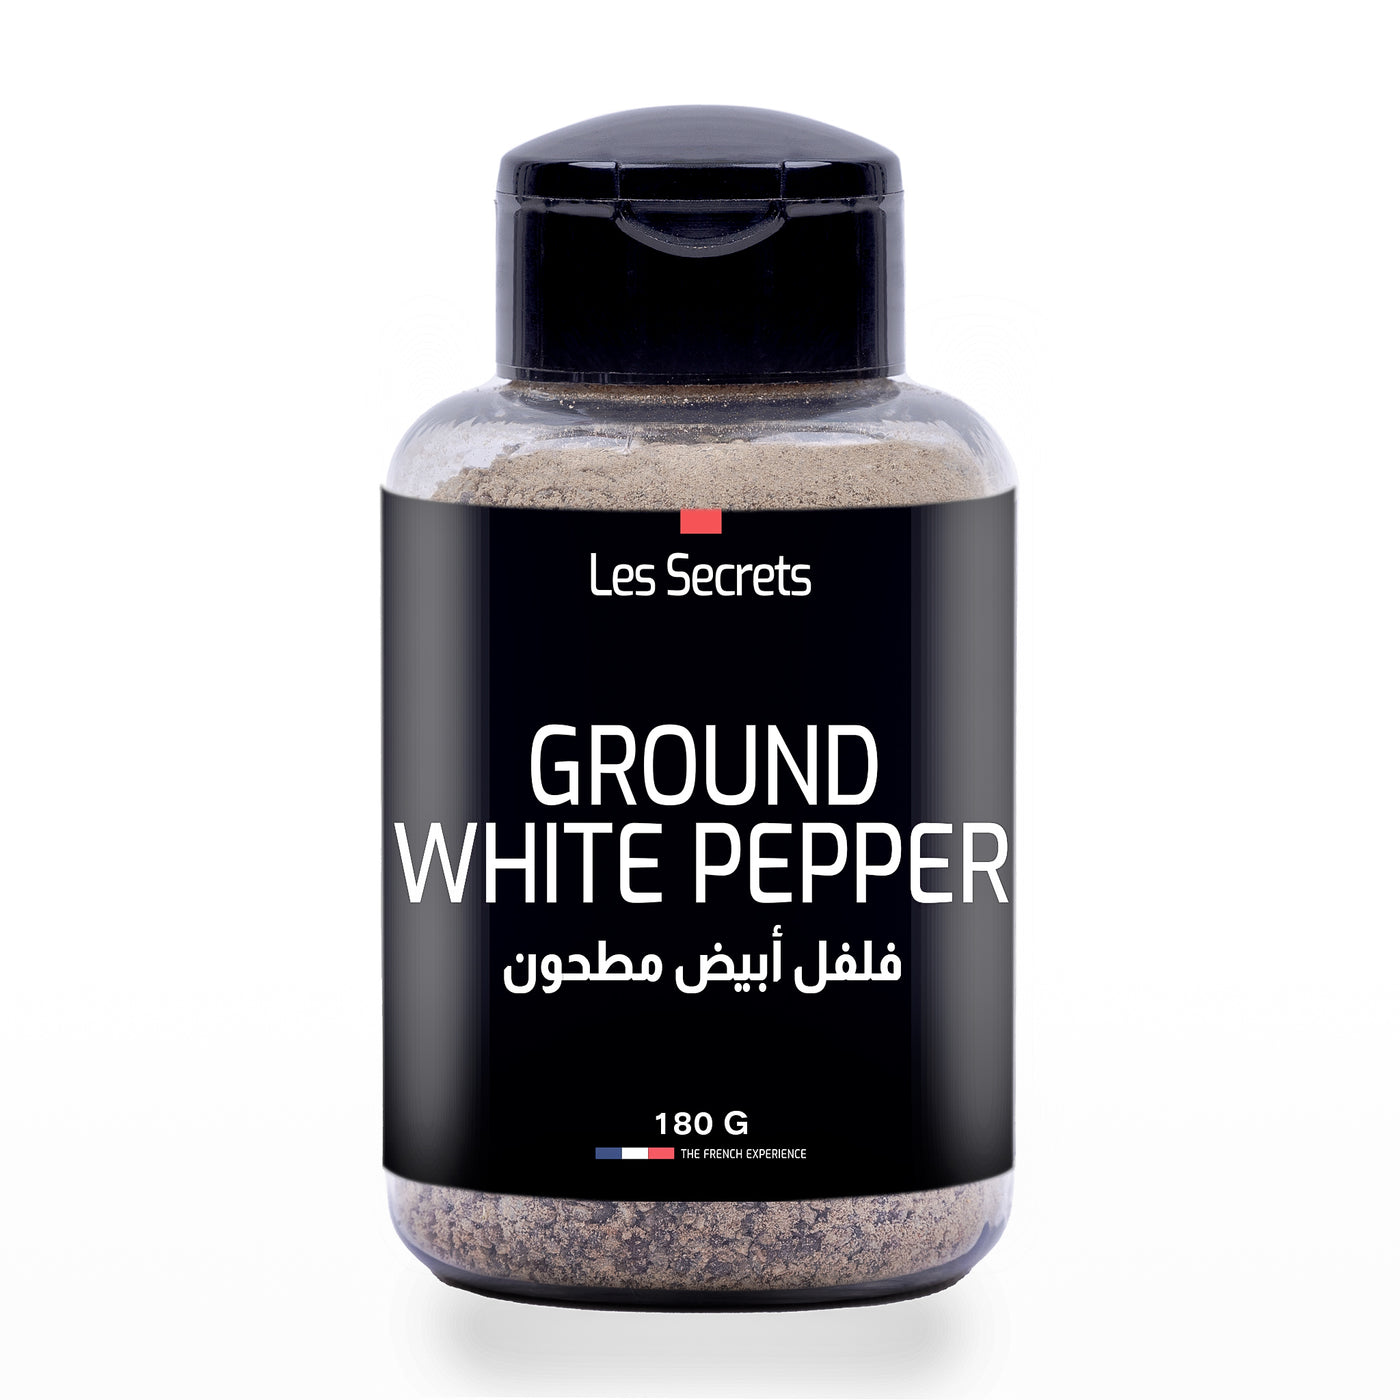 Ground White Pepper - فلفل أبيض مطحون